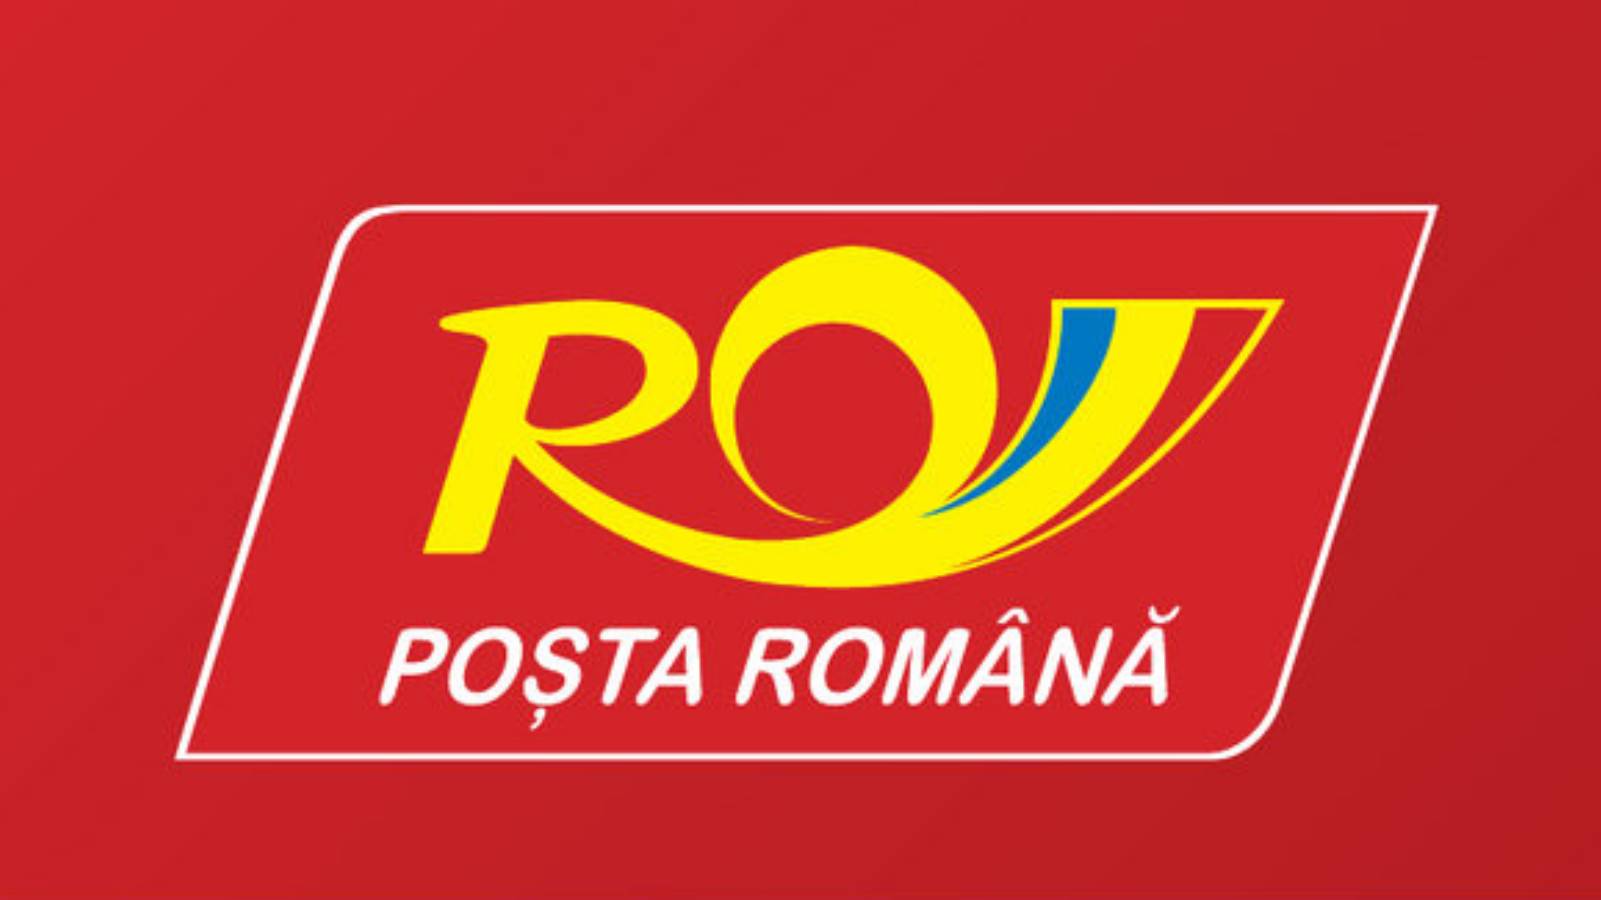 Det rumänska postcoronaviruset